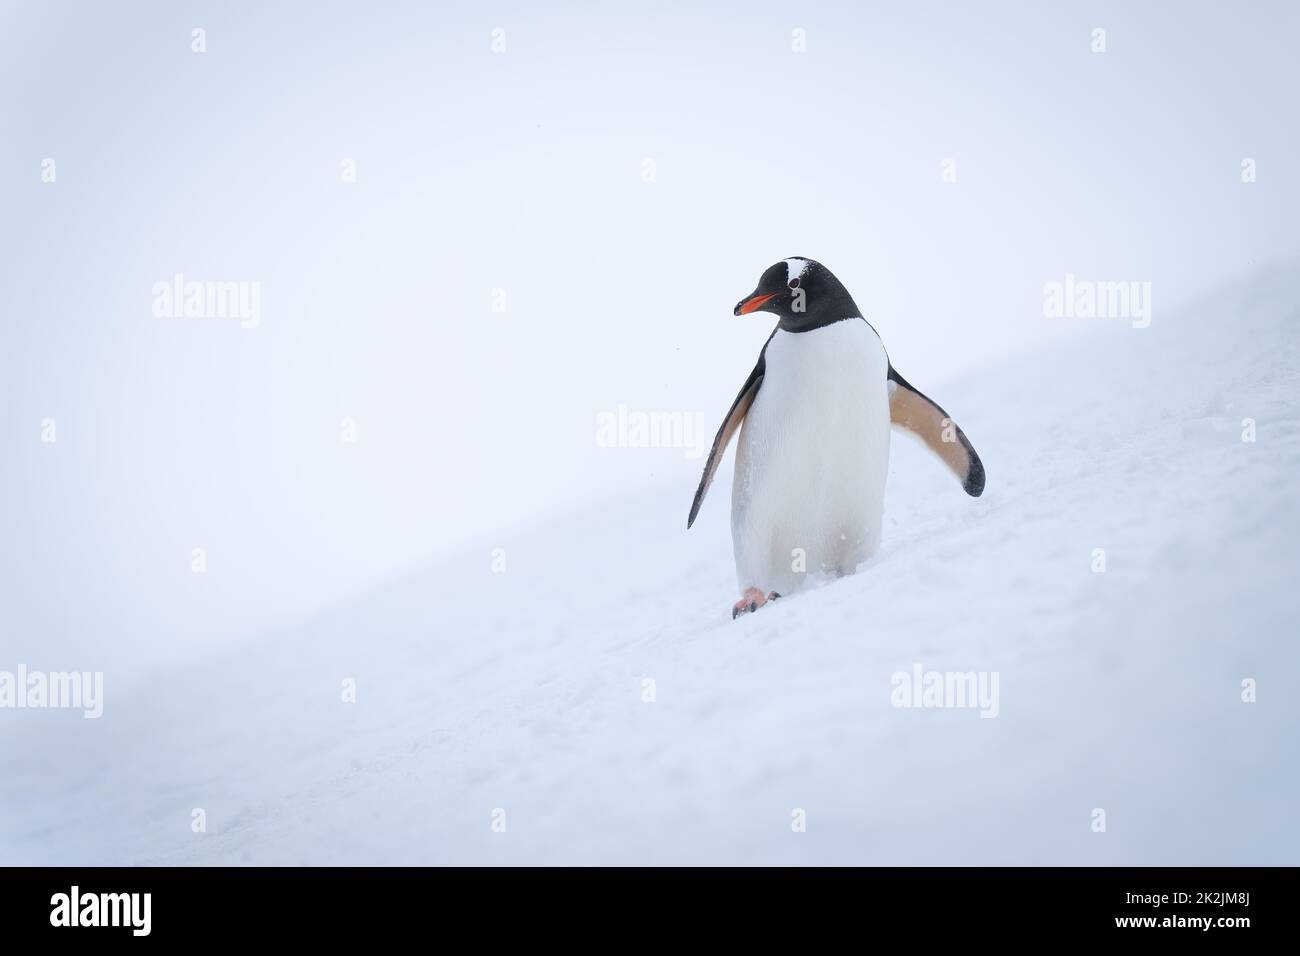 Gentoo penguin on snowy slope eyeing camera Stock Photo